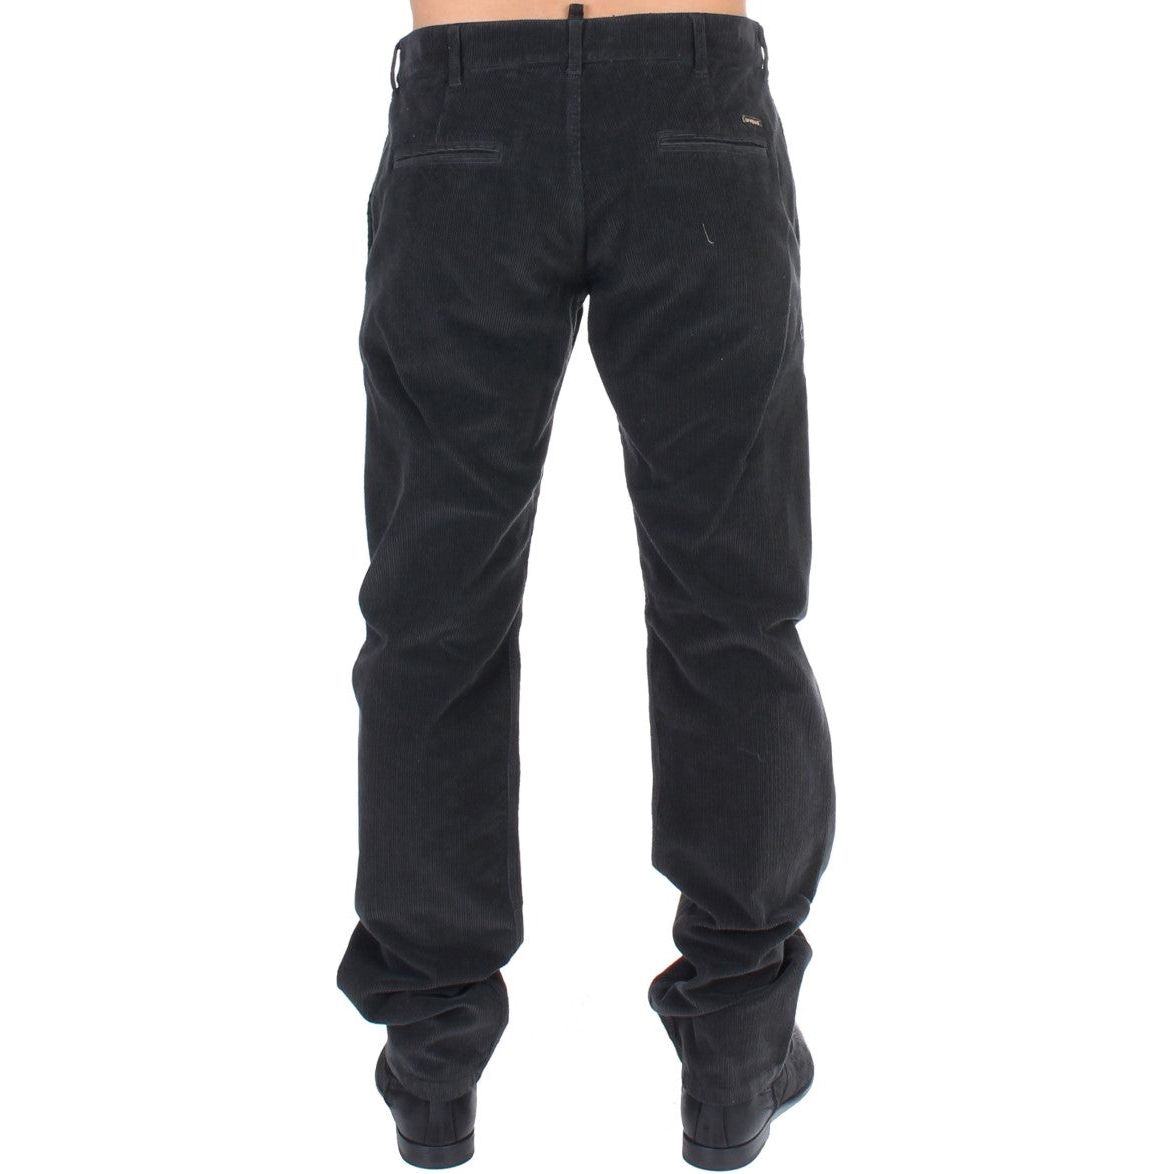 GF Ferre Elegant Black Cotton Corduroy Pants Jeans & Pants black-corduroy-cotton-straight-fit-pants 53278-black-corduroy-cotton-straight-fit-pants-2.jpg